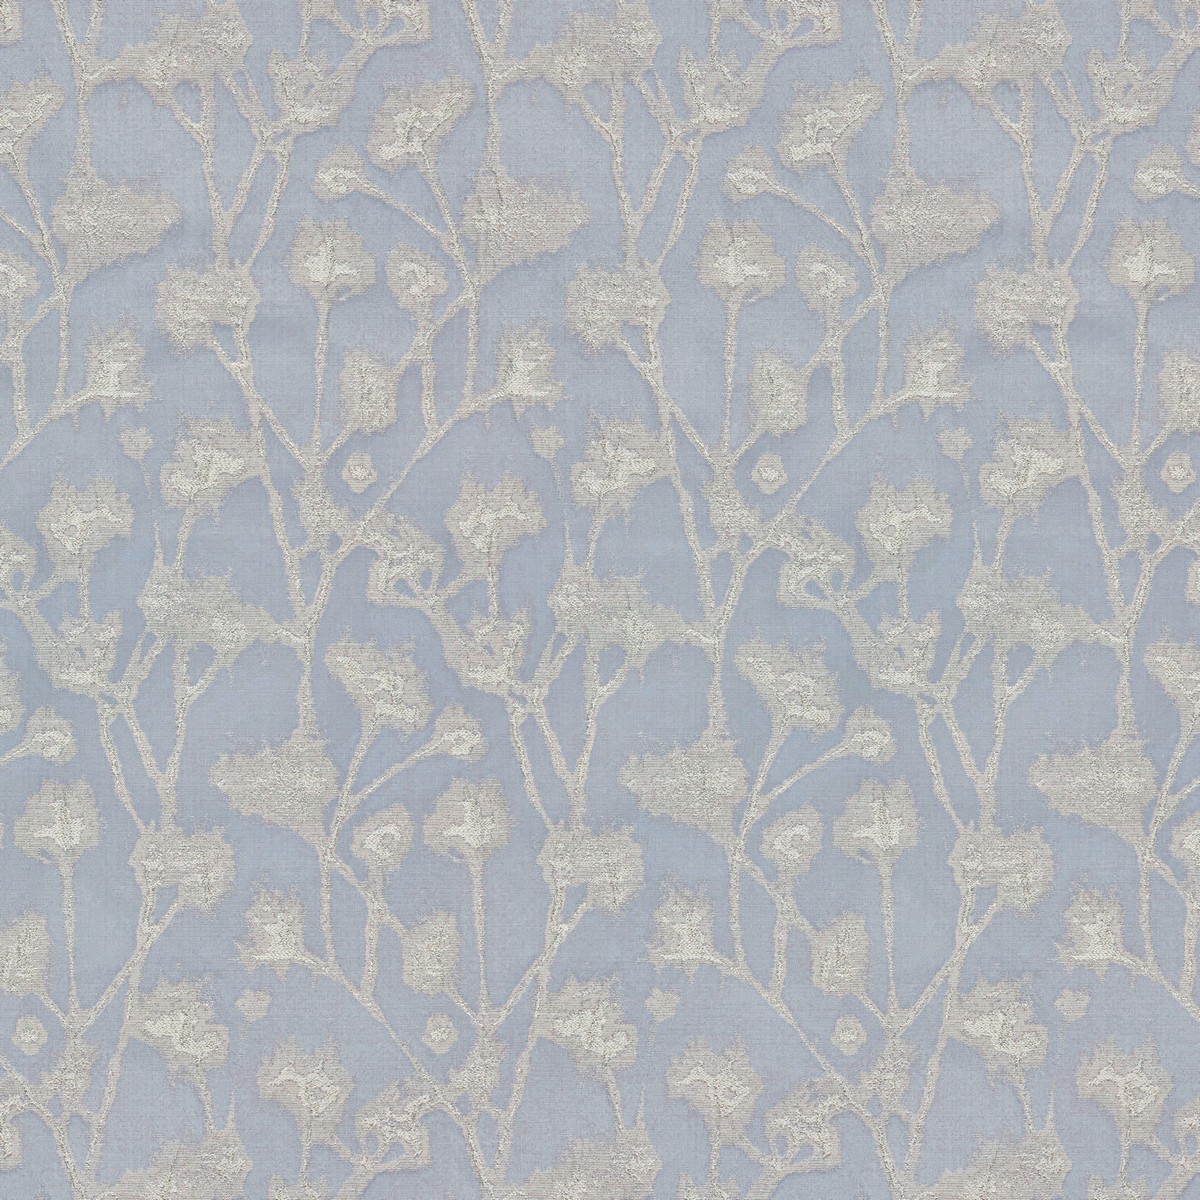 Altamira Wedgewood Fabric by Ashley Wilde